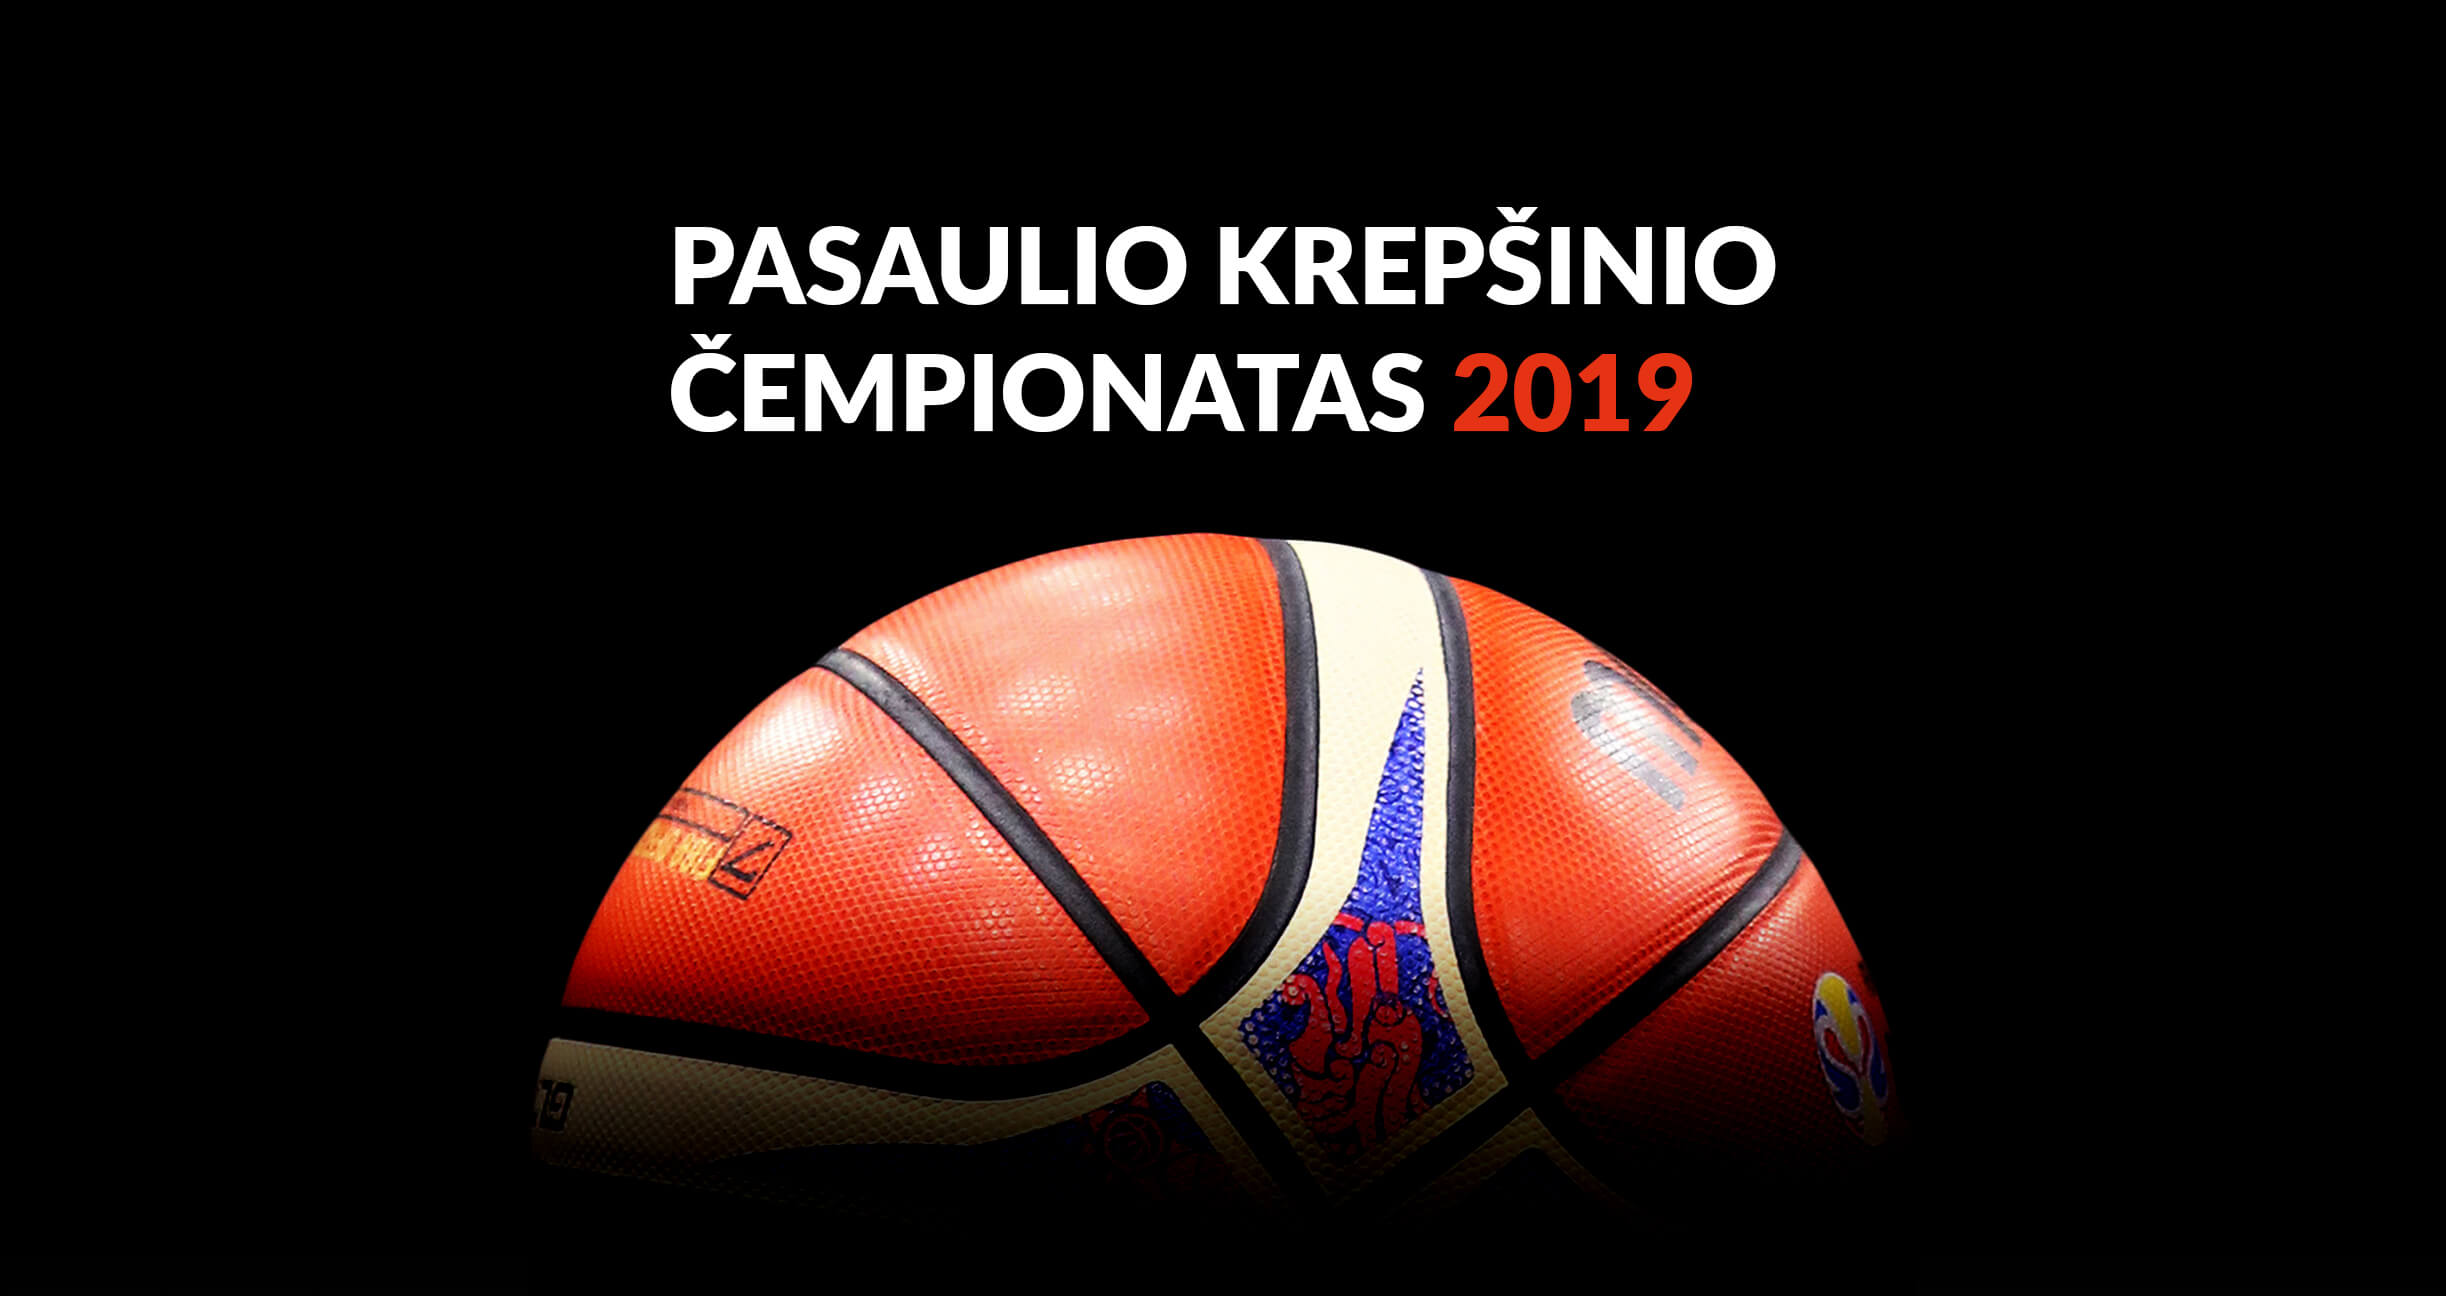 FIBA World Cup 2019